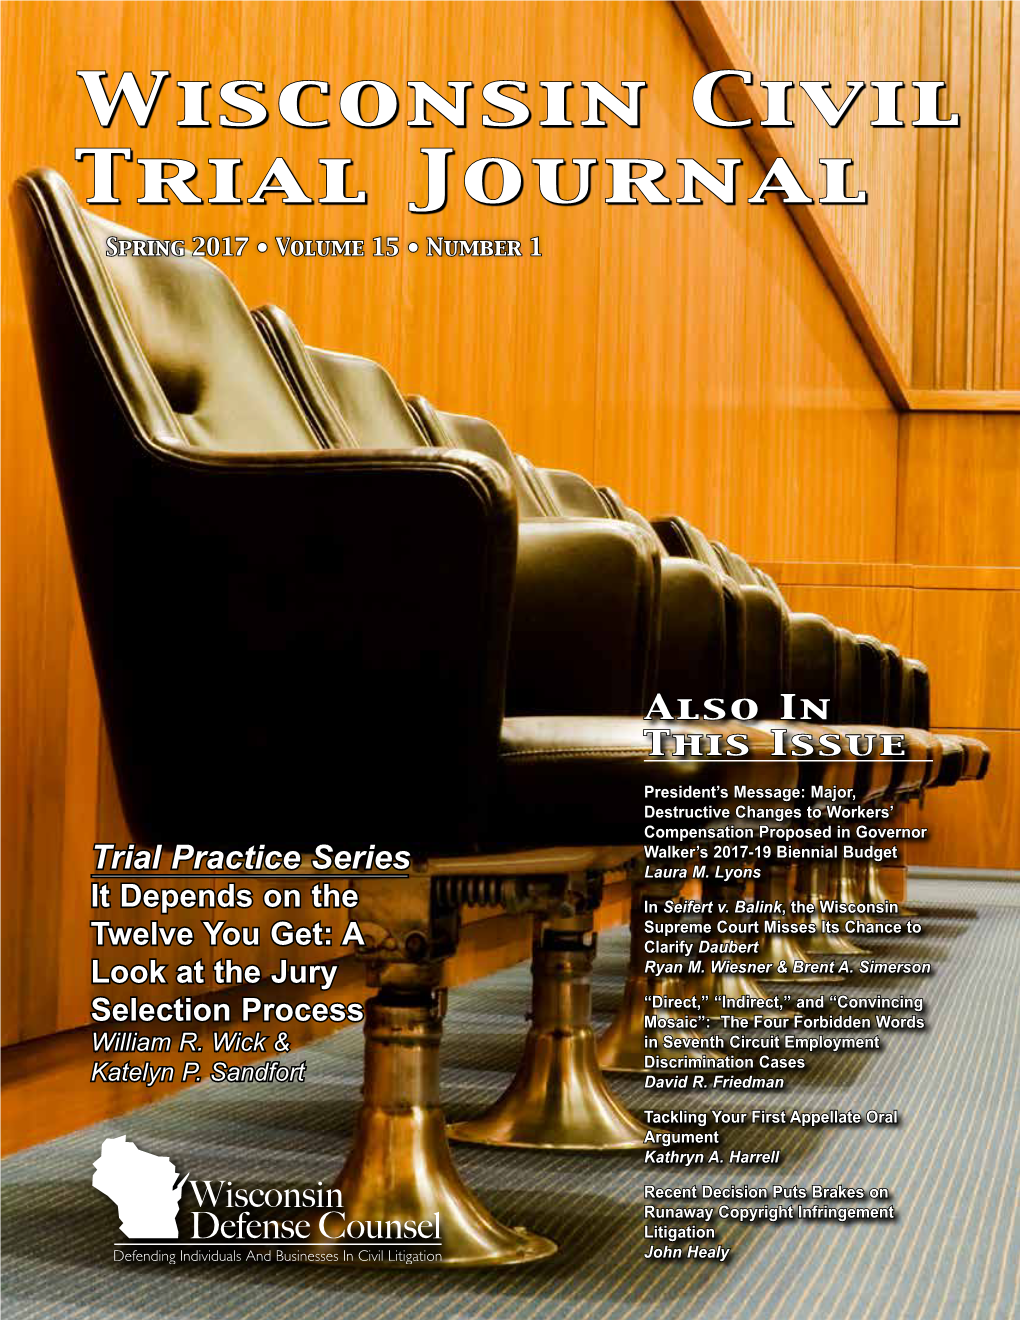 Wisconsin Civil Trial Journal Spring 2017 • Volume 15 • Number 1